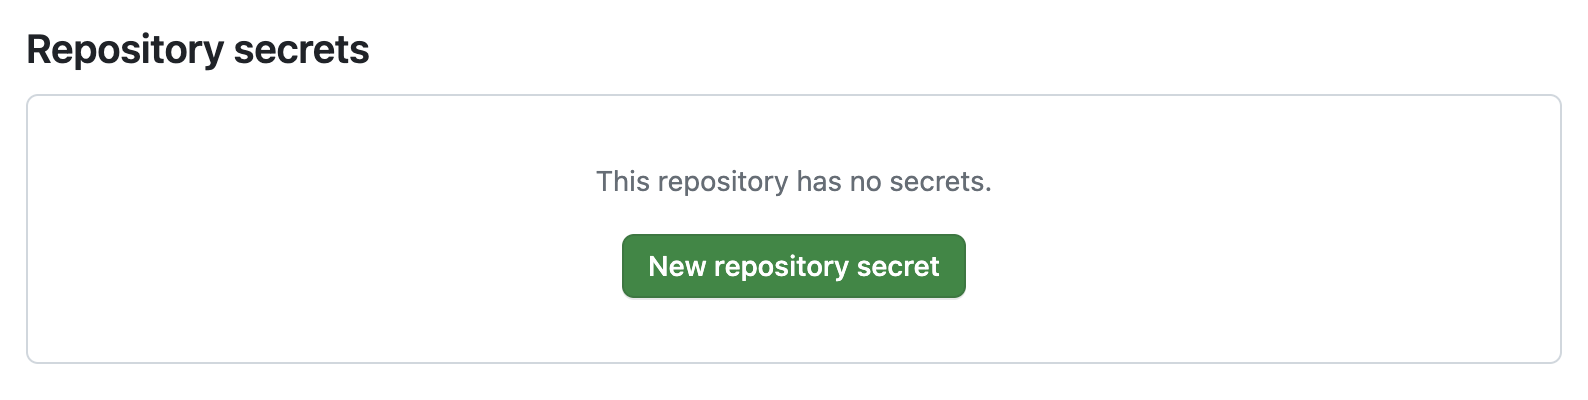 Empty Repository secrets